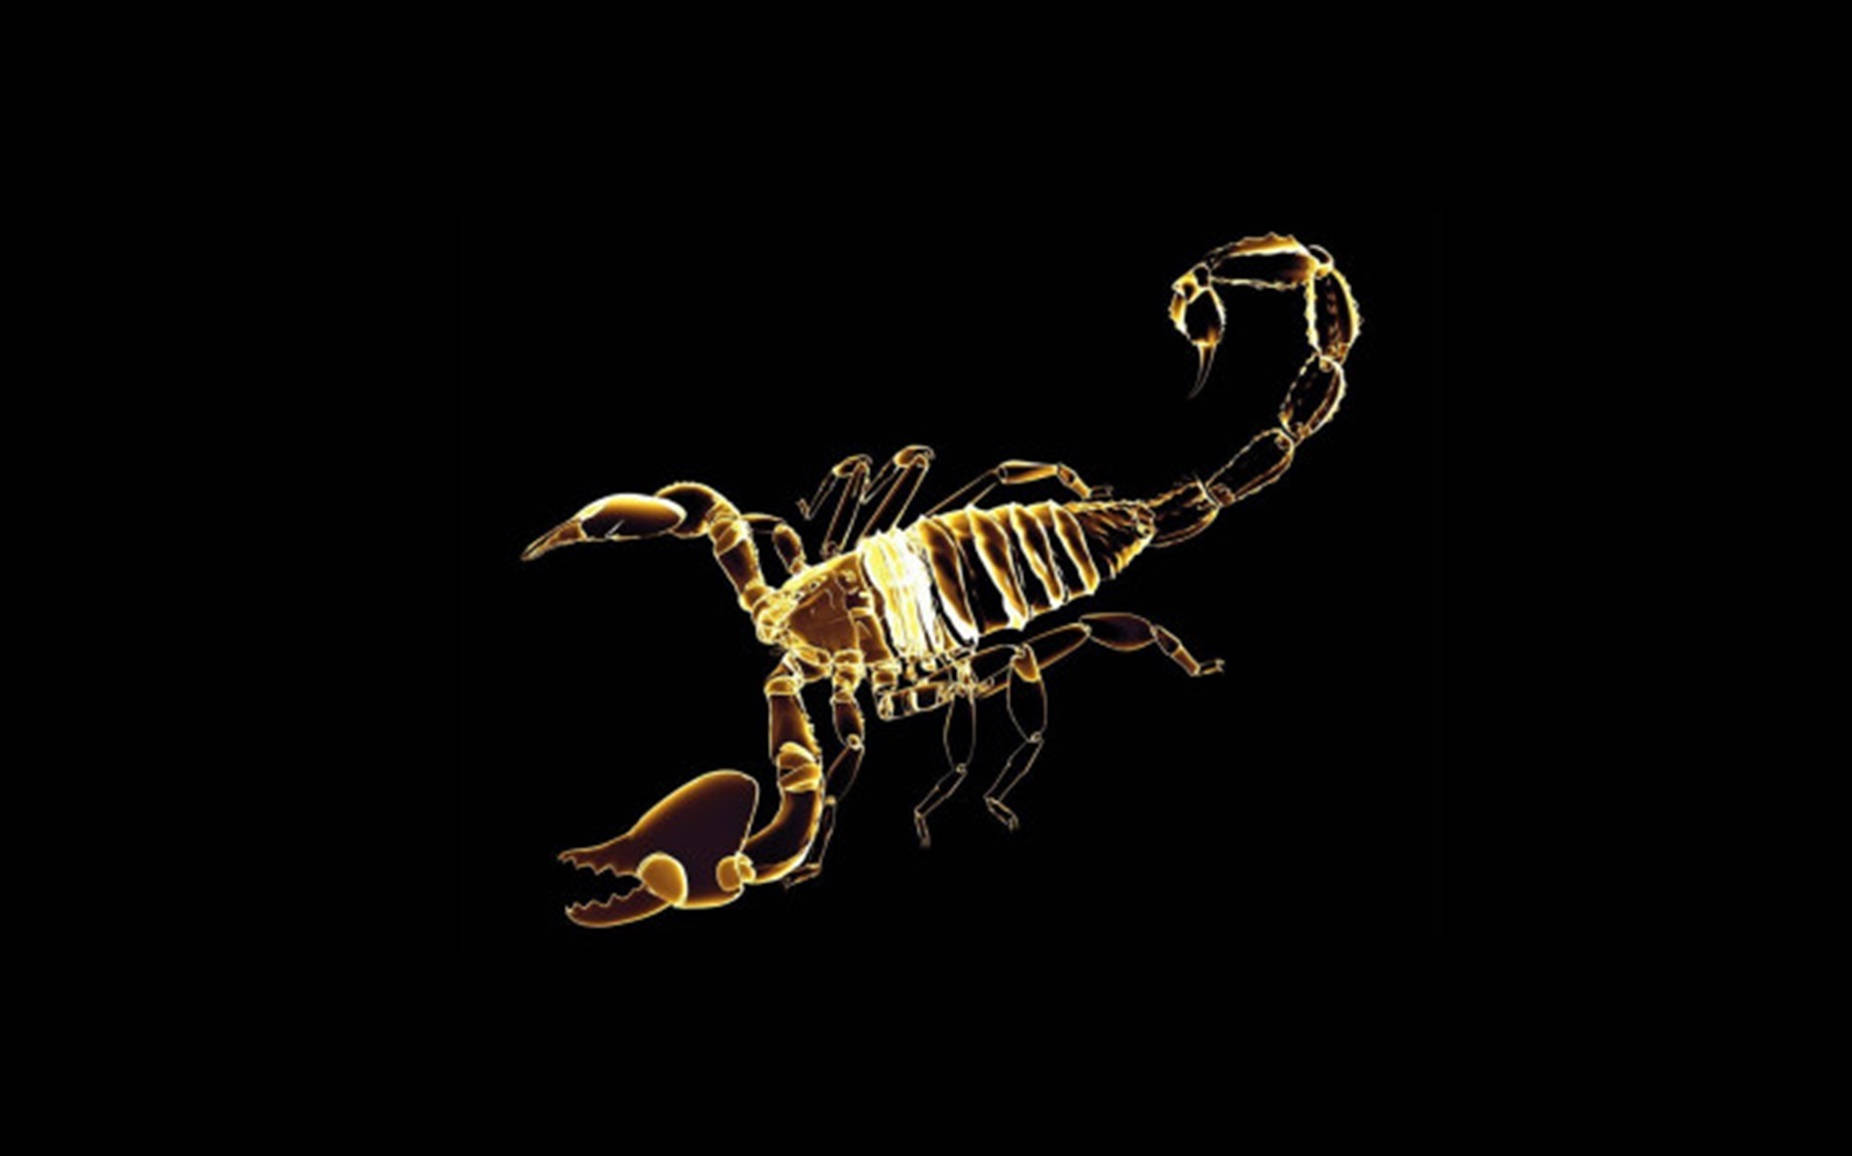 Scorpion Gold Hologram Art Wallpaper